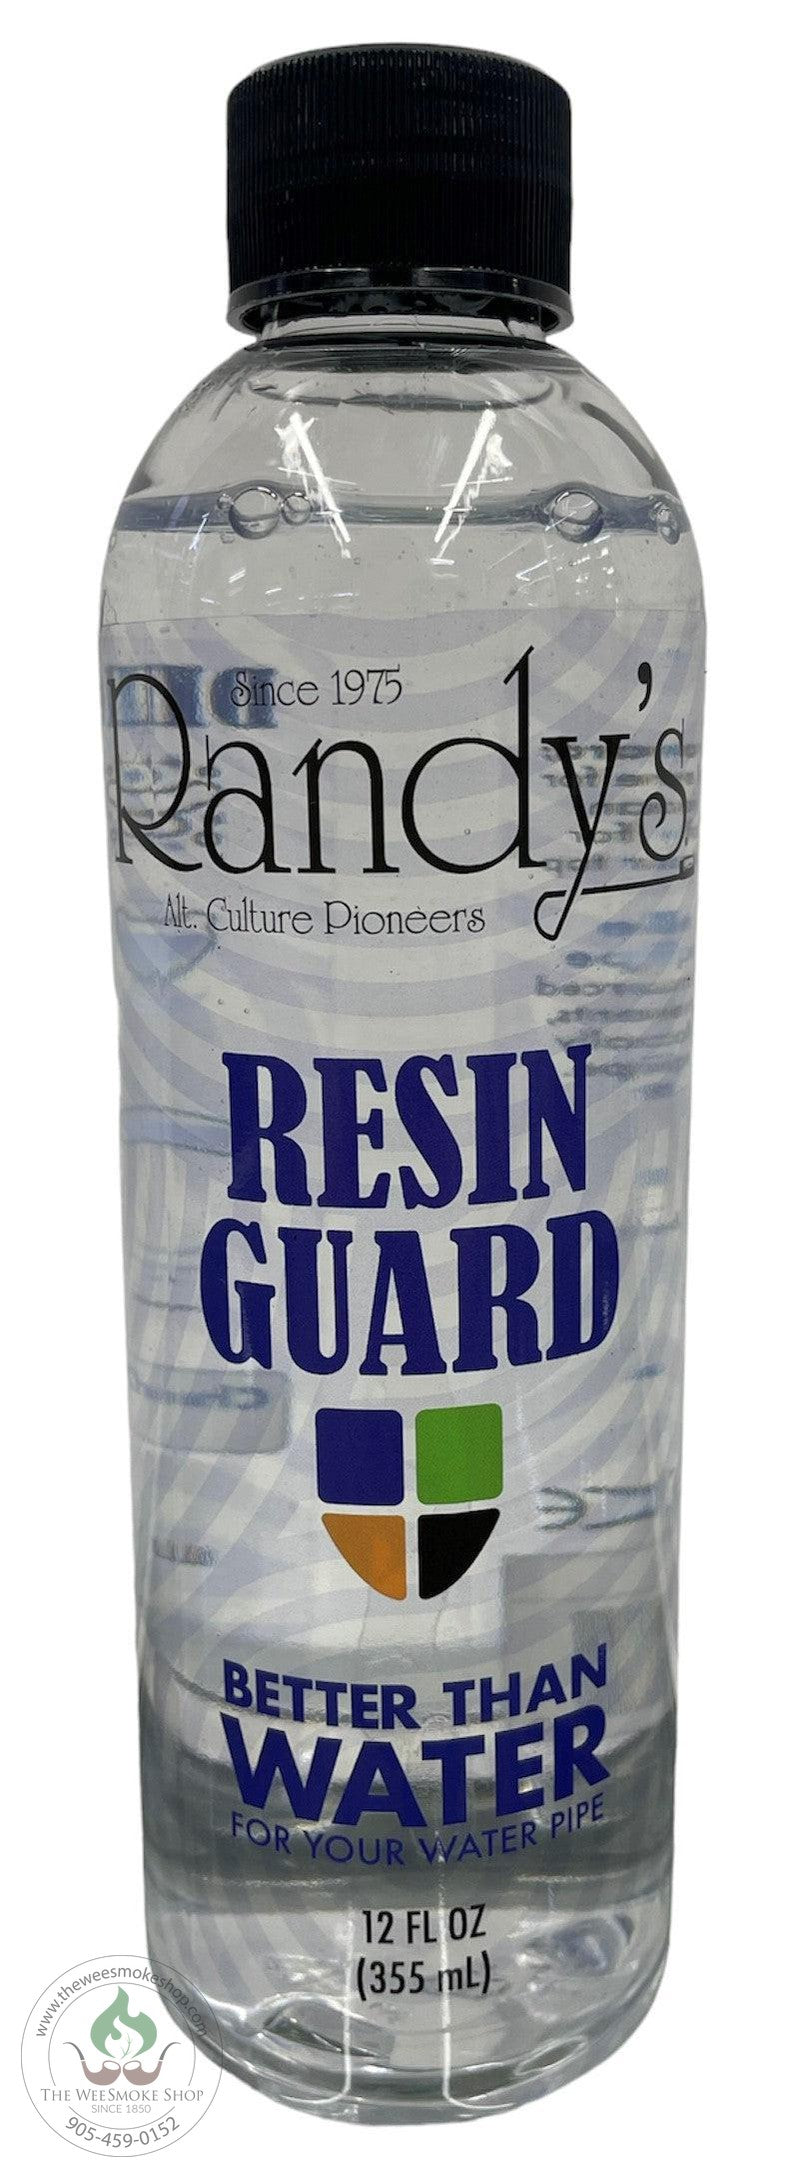 Randy's Resin Guard - The Wee Smoke Shop